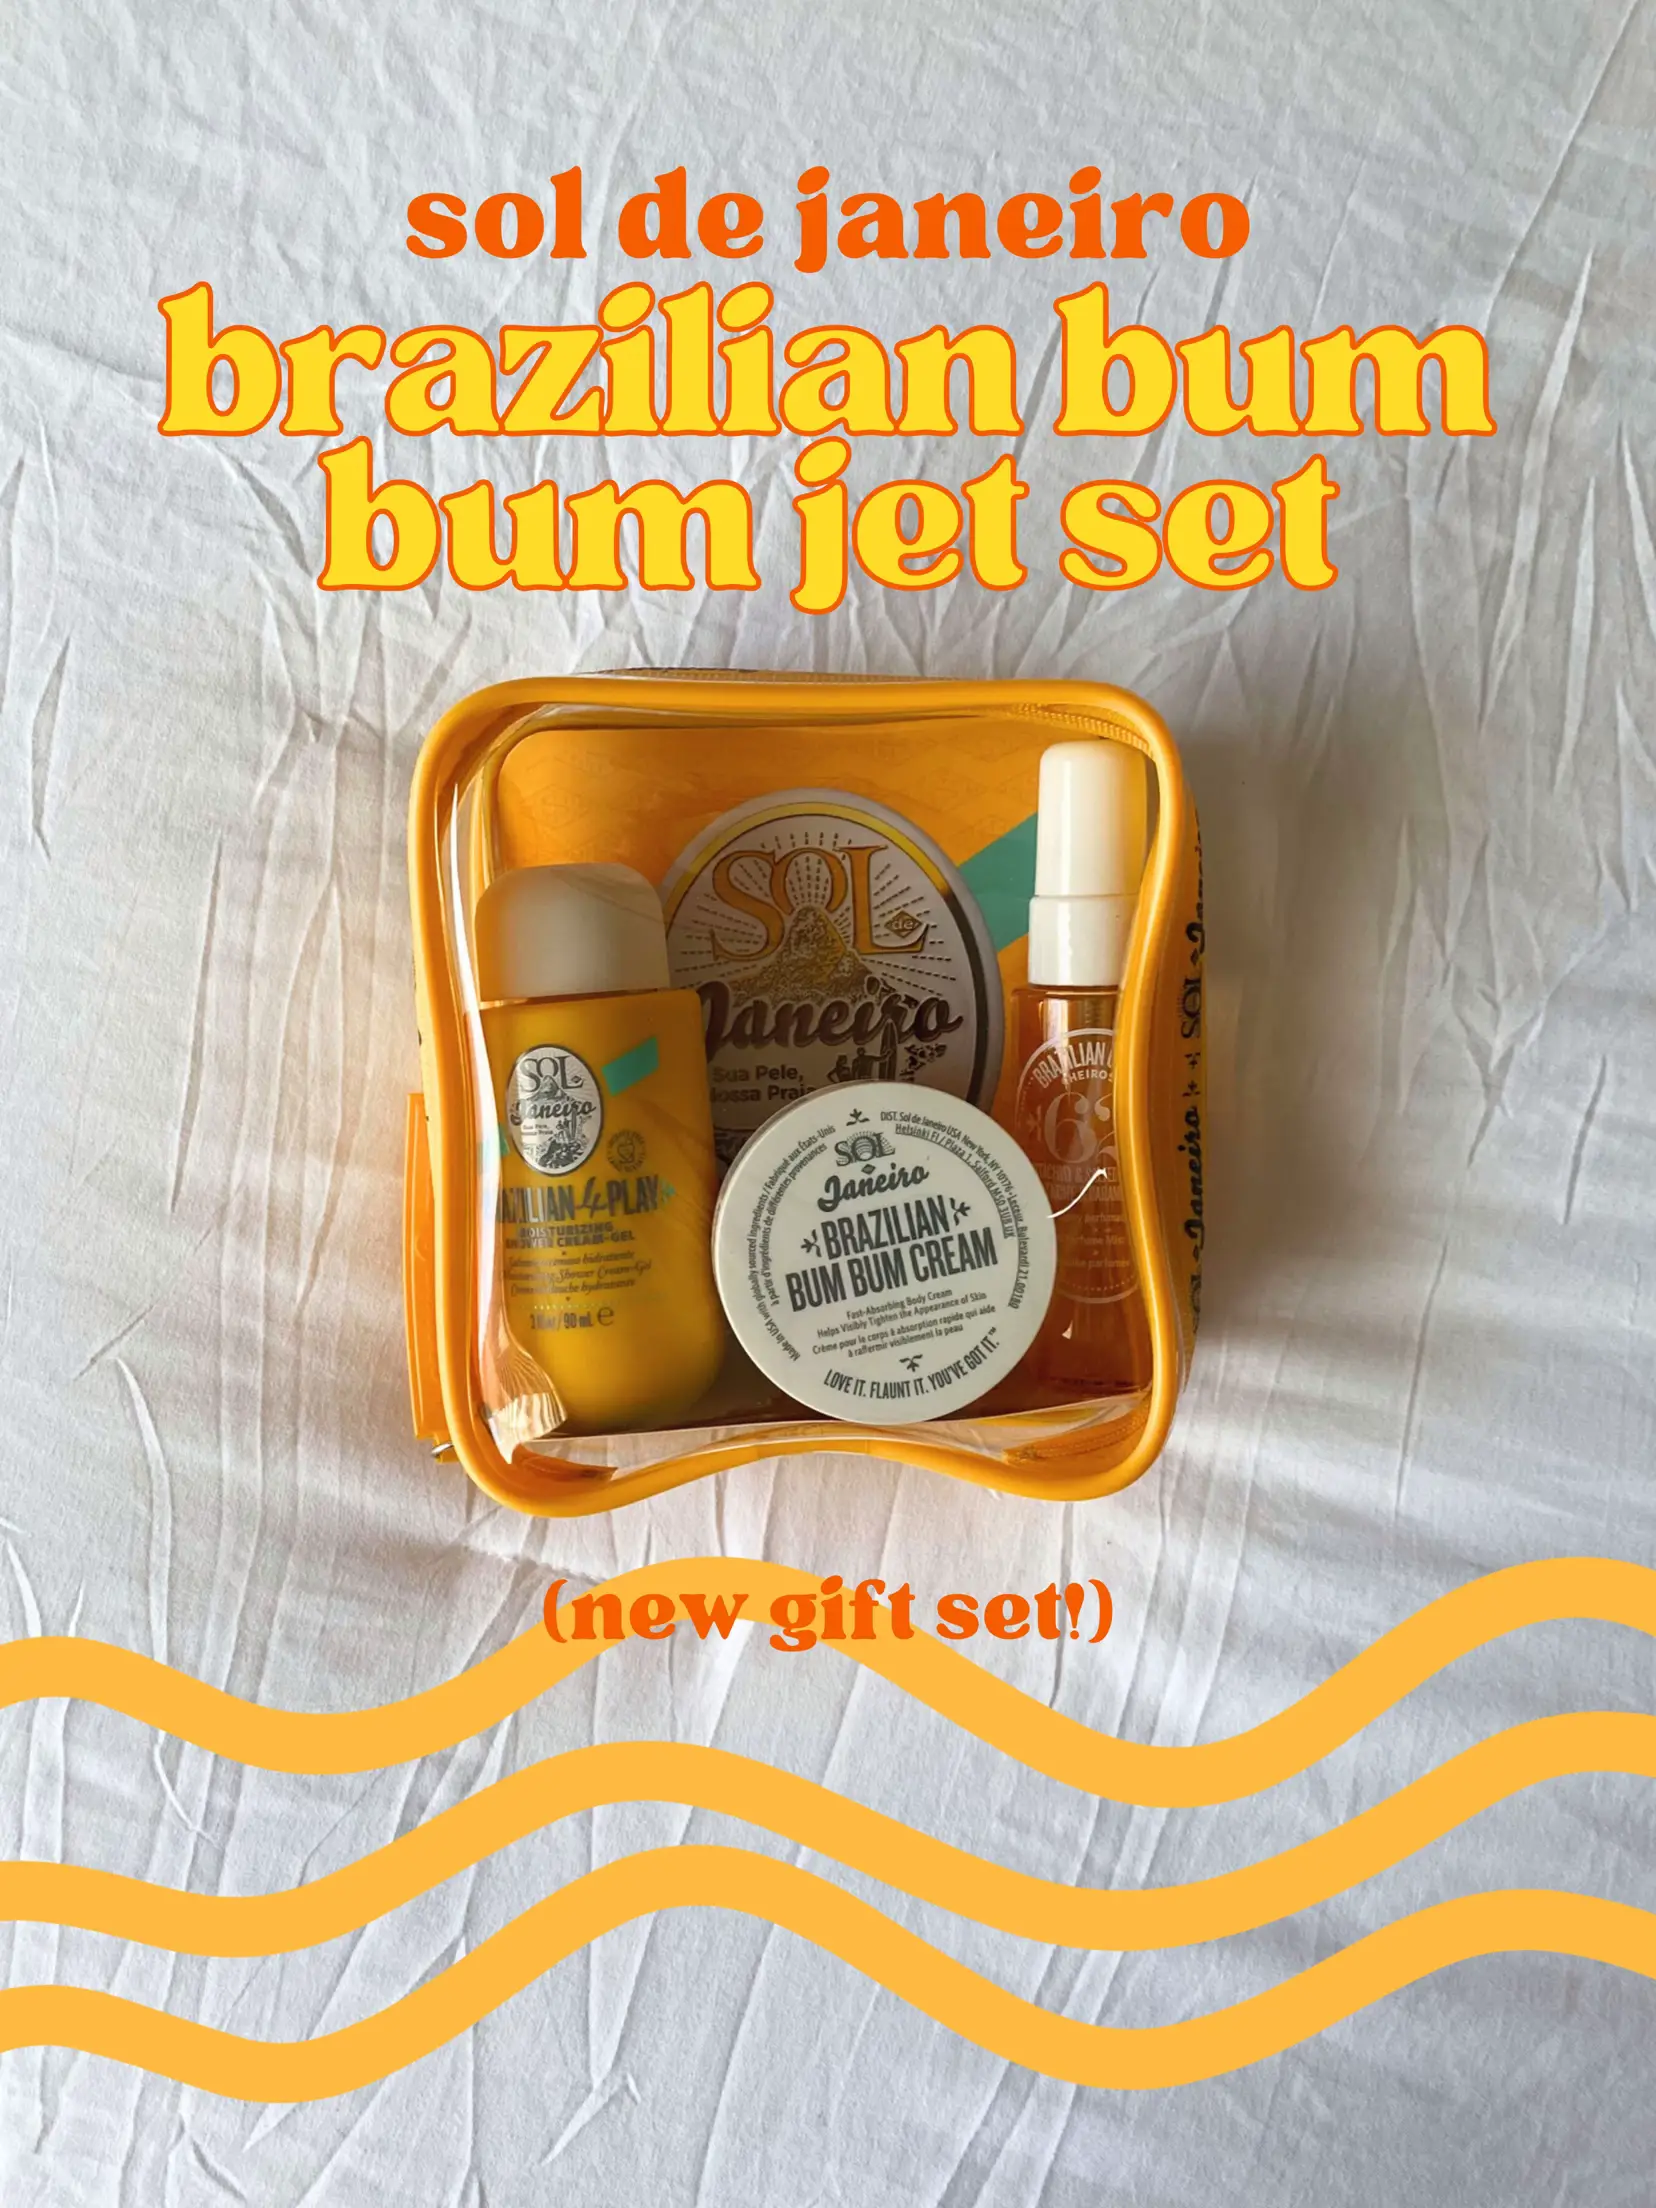 New Sol de Janeiro Brazilian Bum Bum Jet travel Set Cream Wash perfume Mist